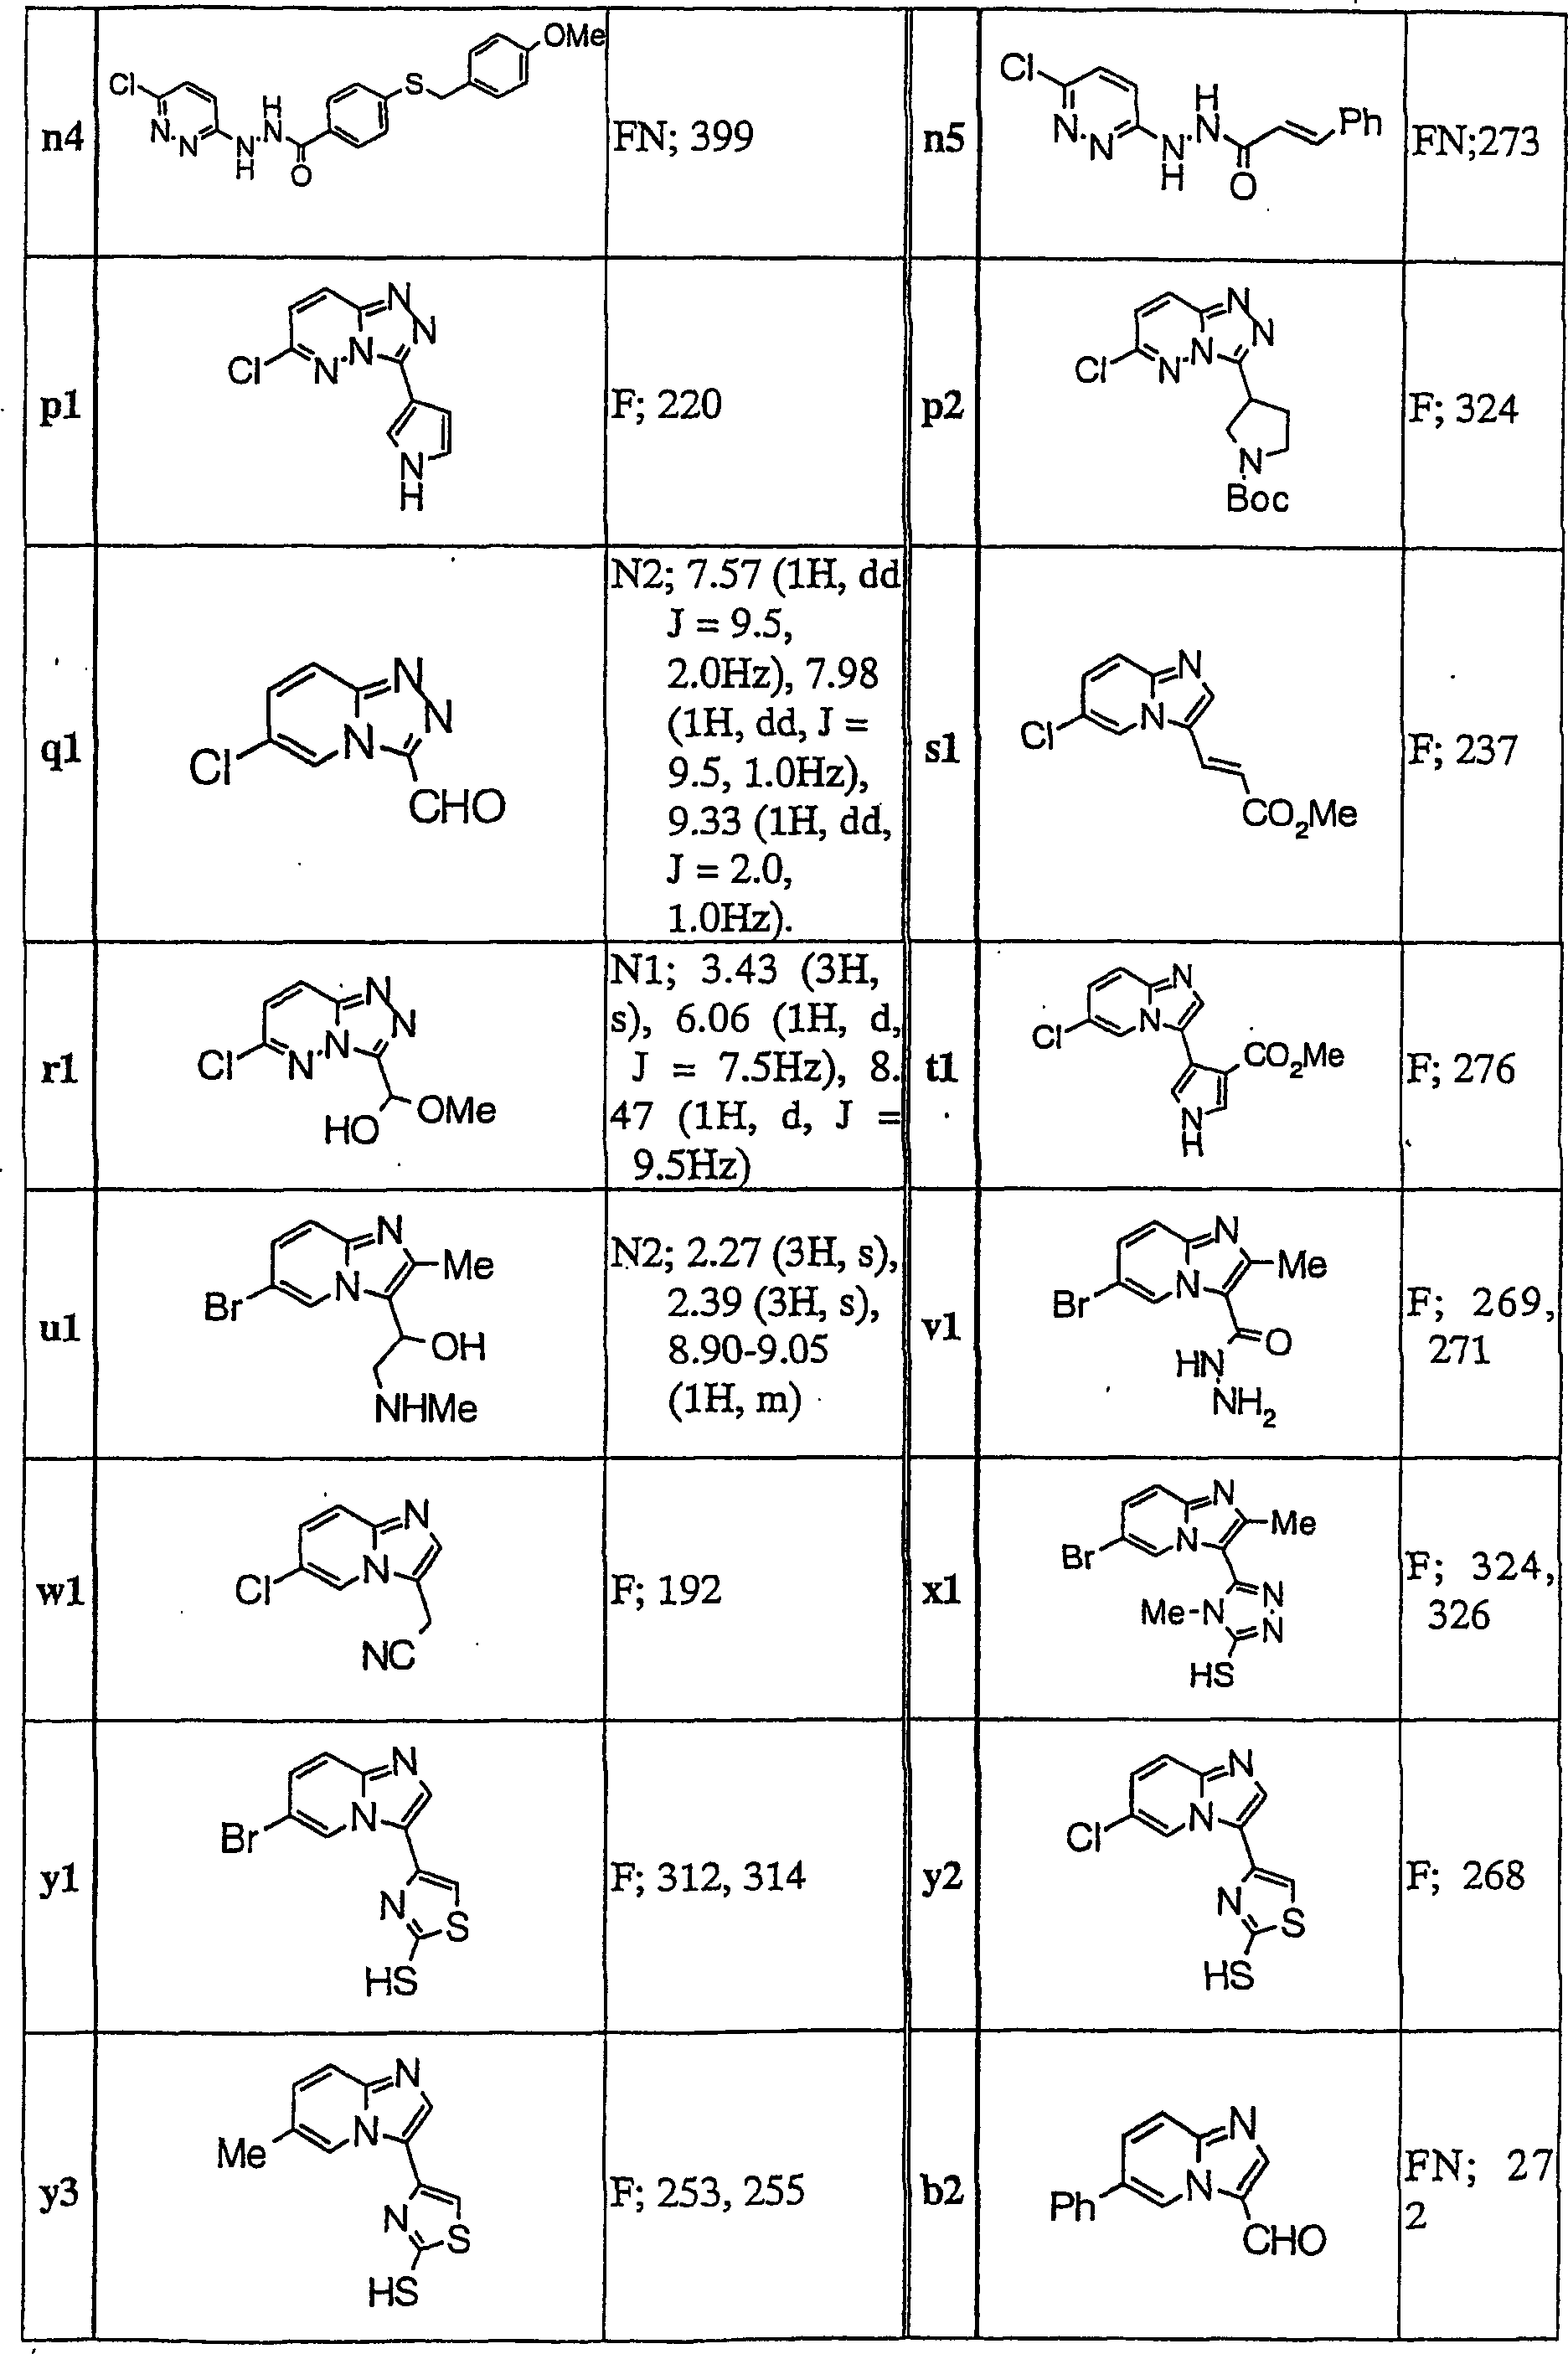 Imidazopyridine derivatives